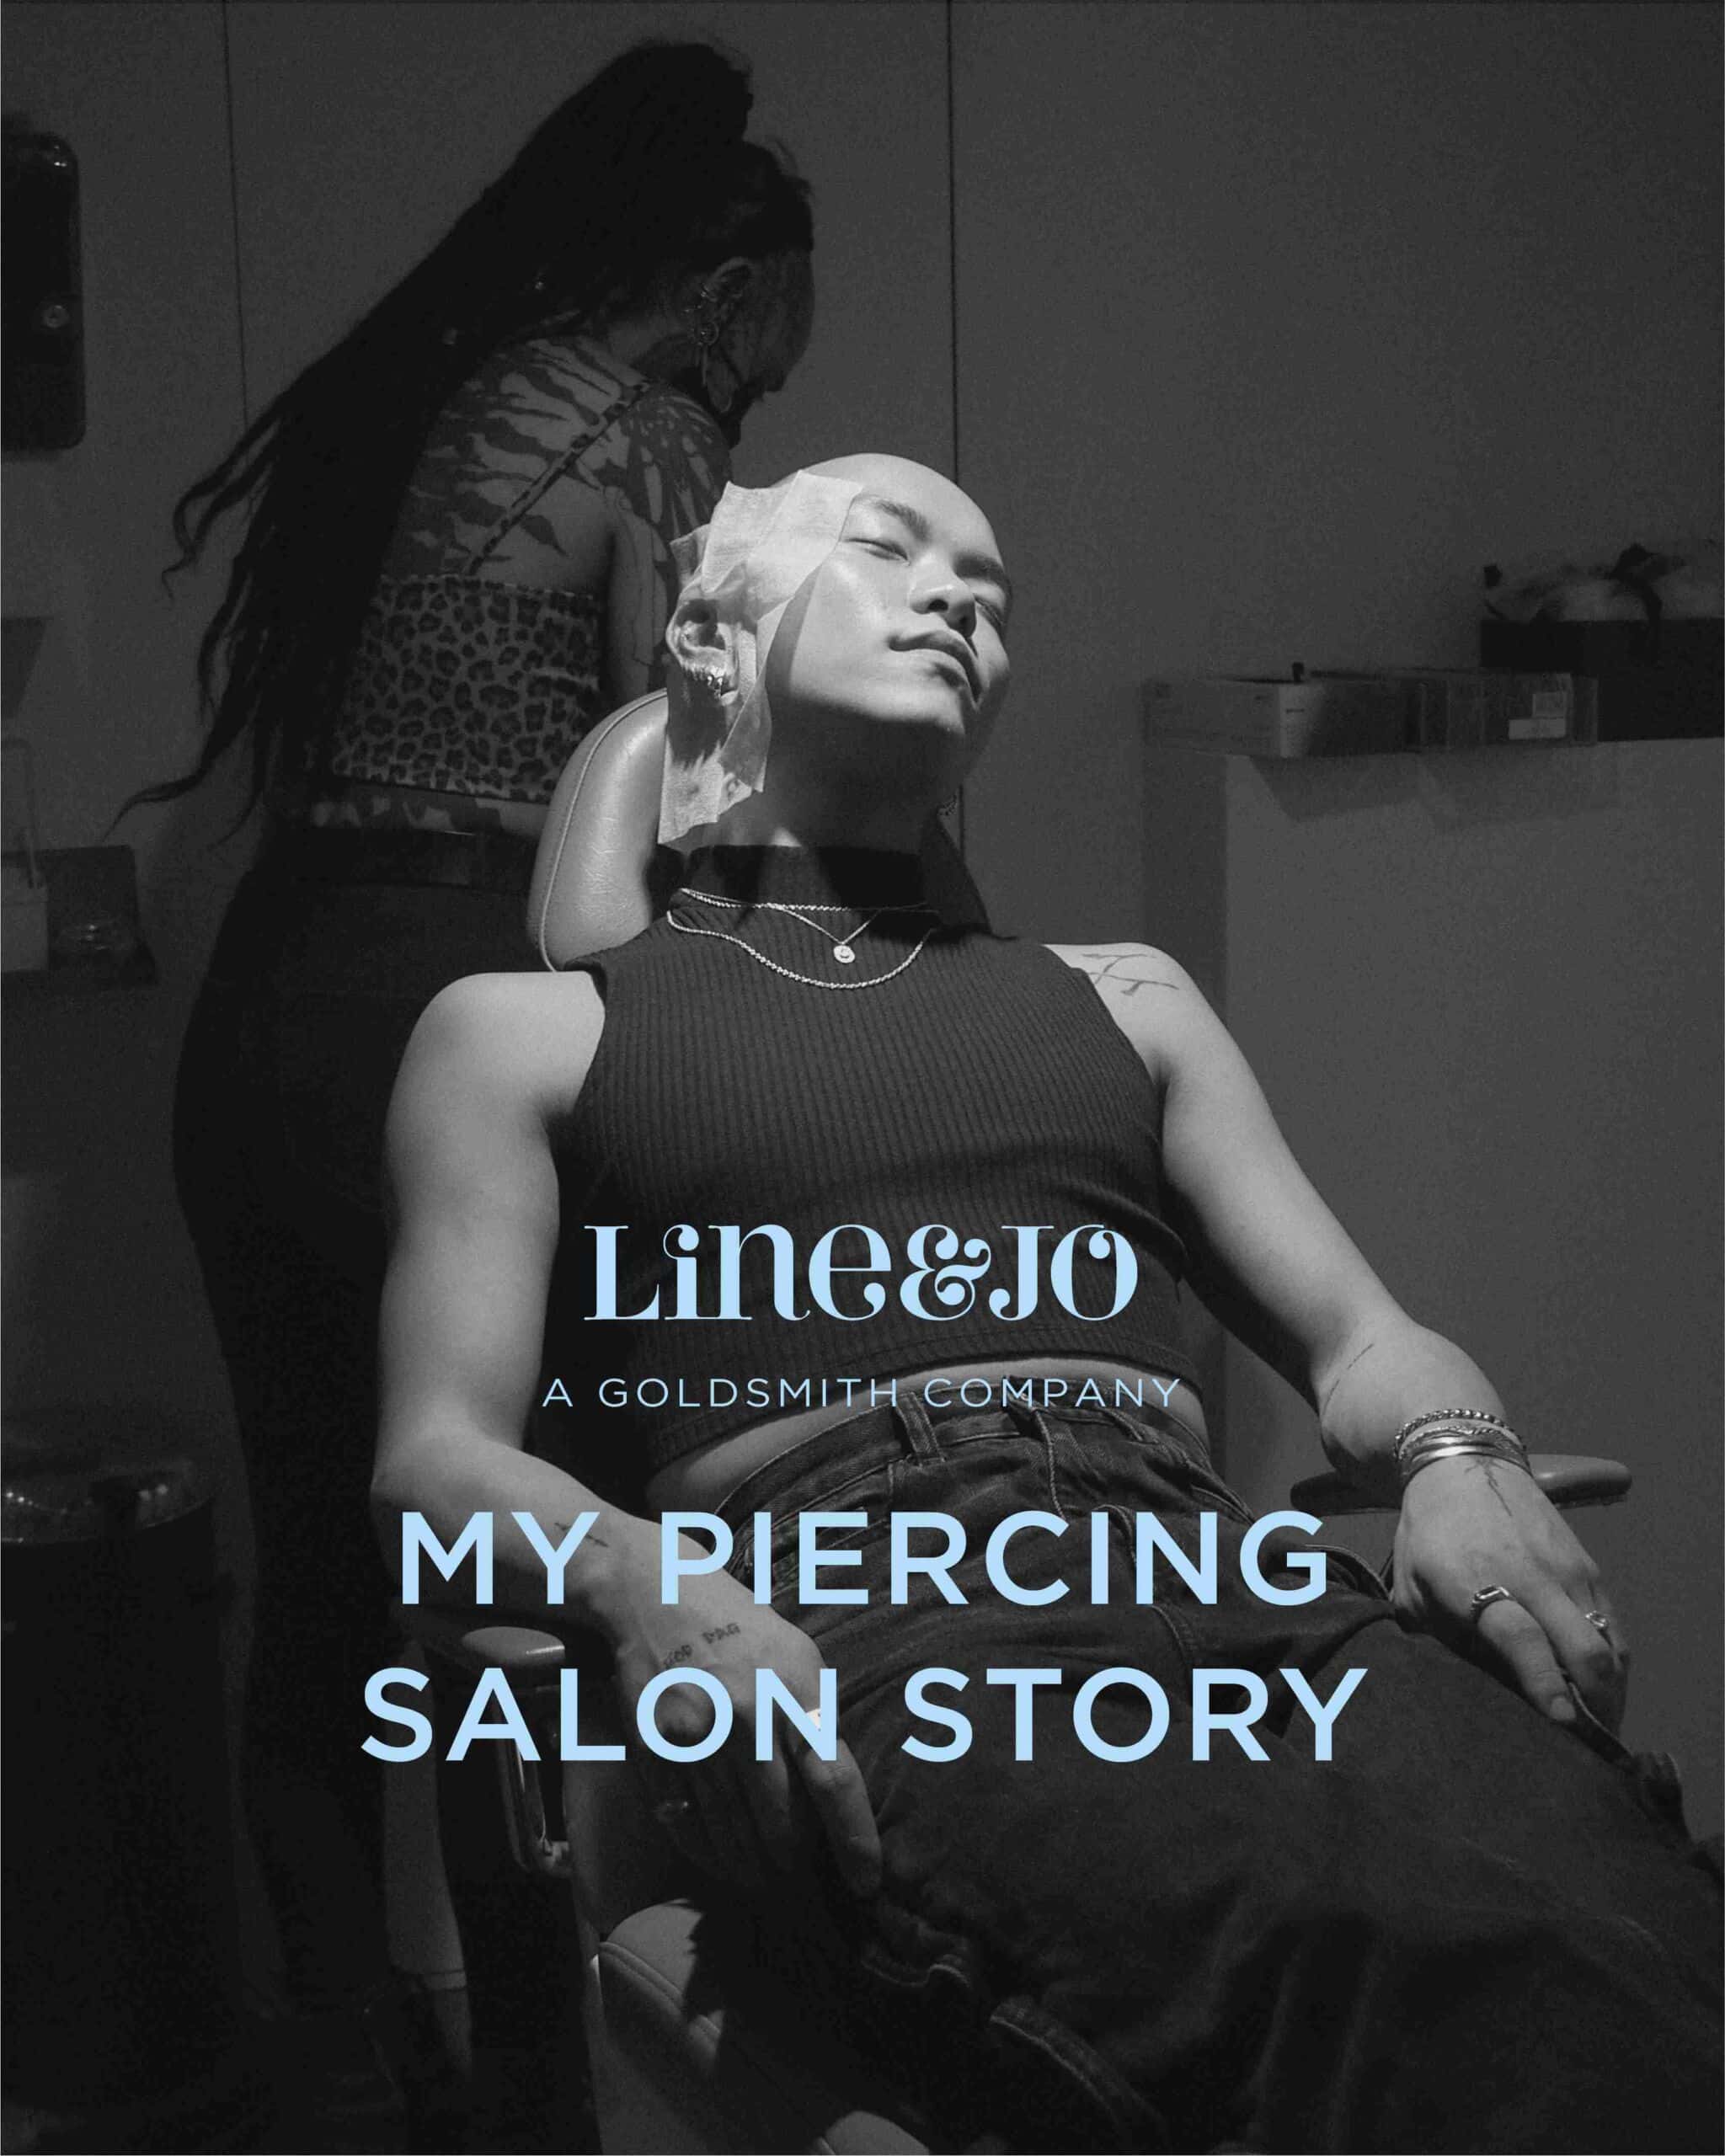 My piercing salon story: Benjamin Dysager